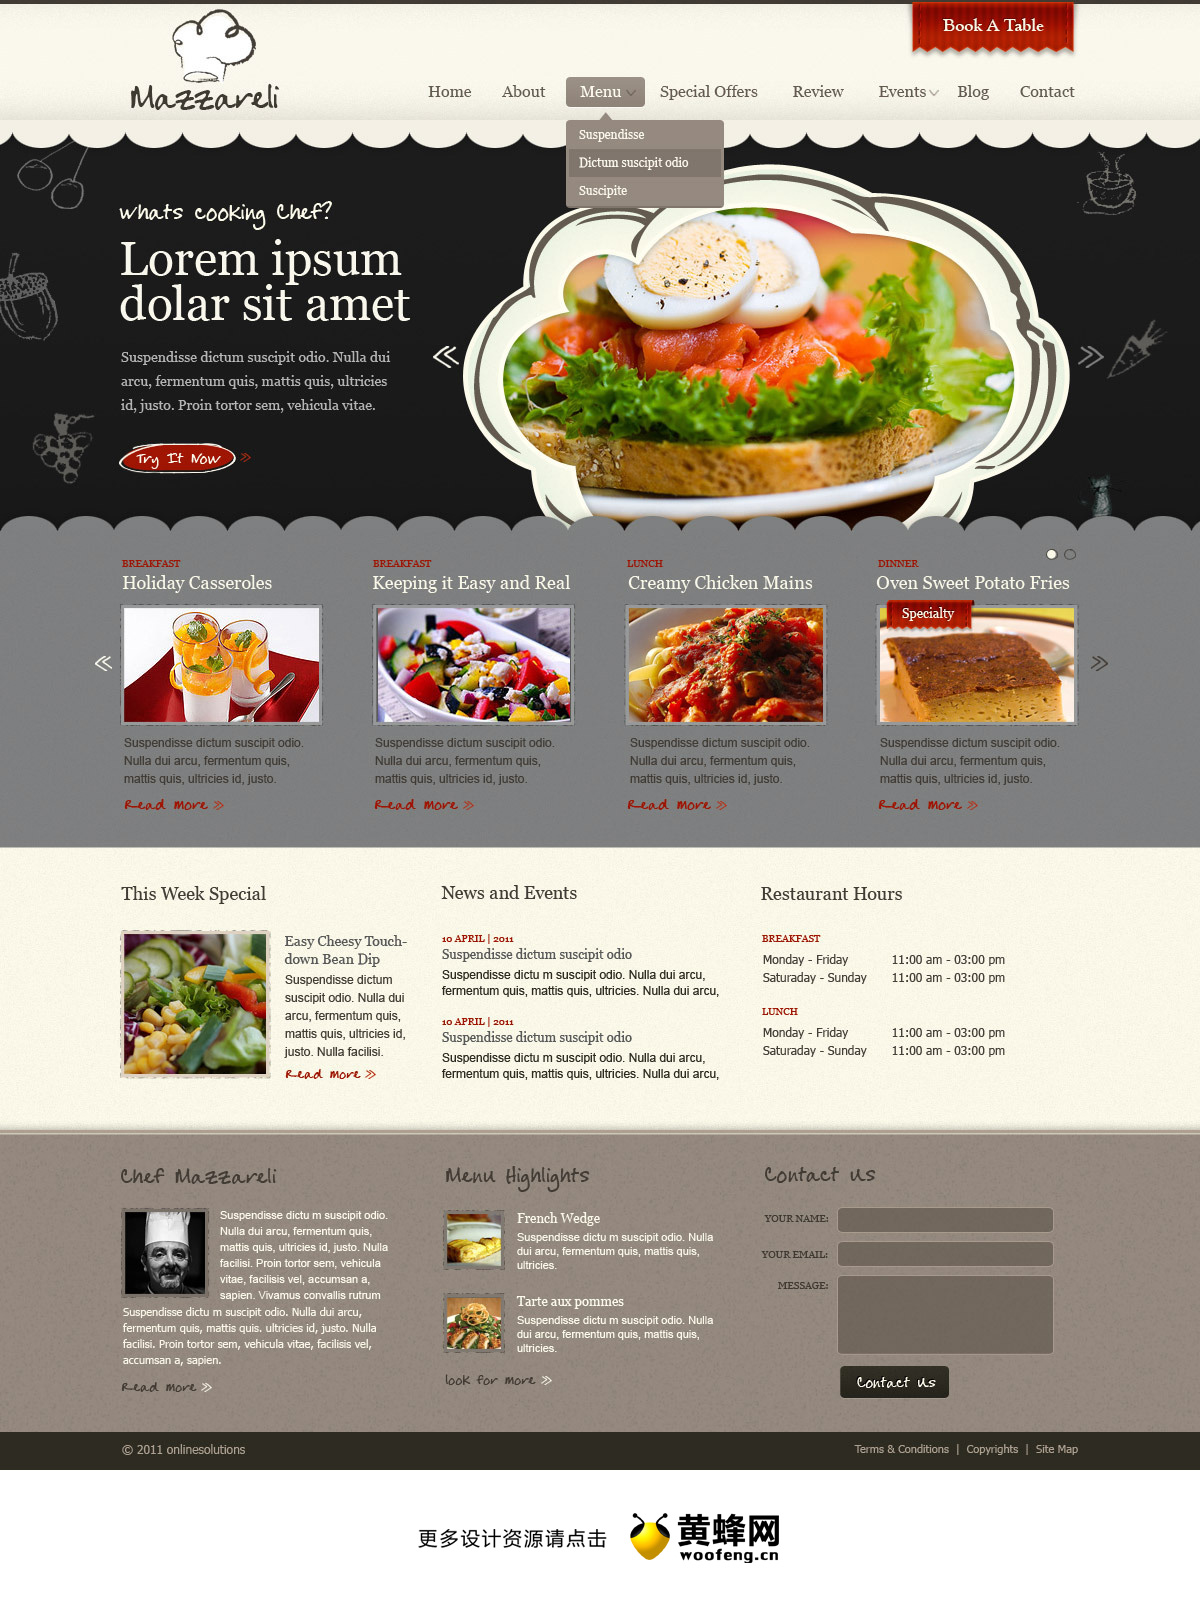 Mazzareli美食网站模板设计欣赏，来源自黄蜂网https://woofeng.cn/